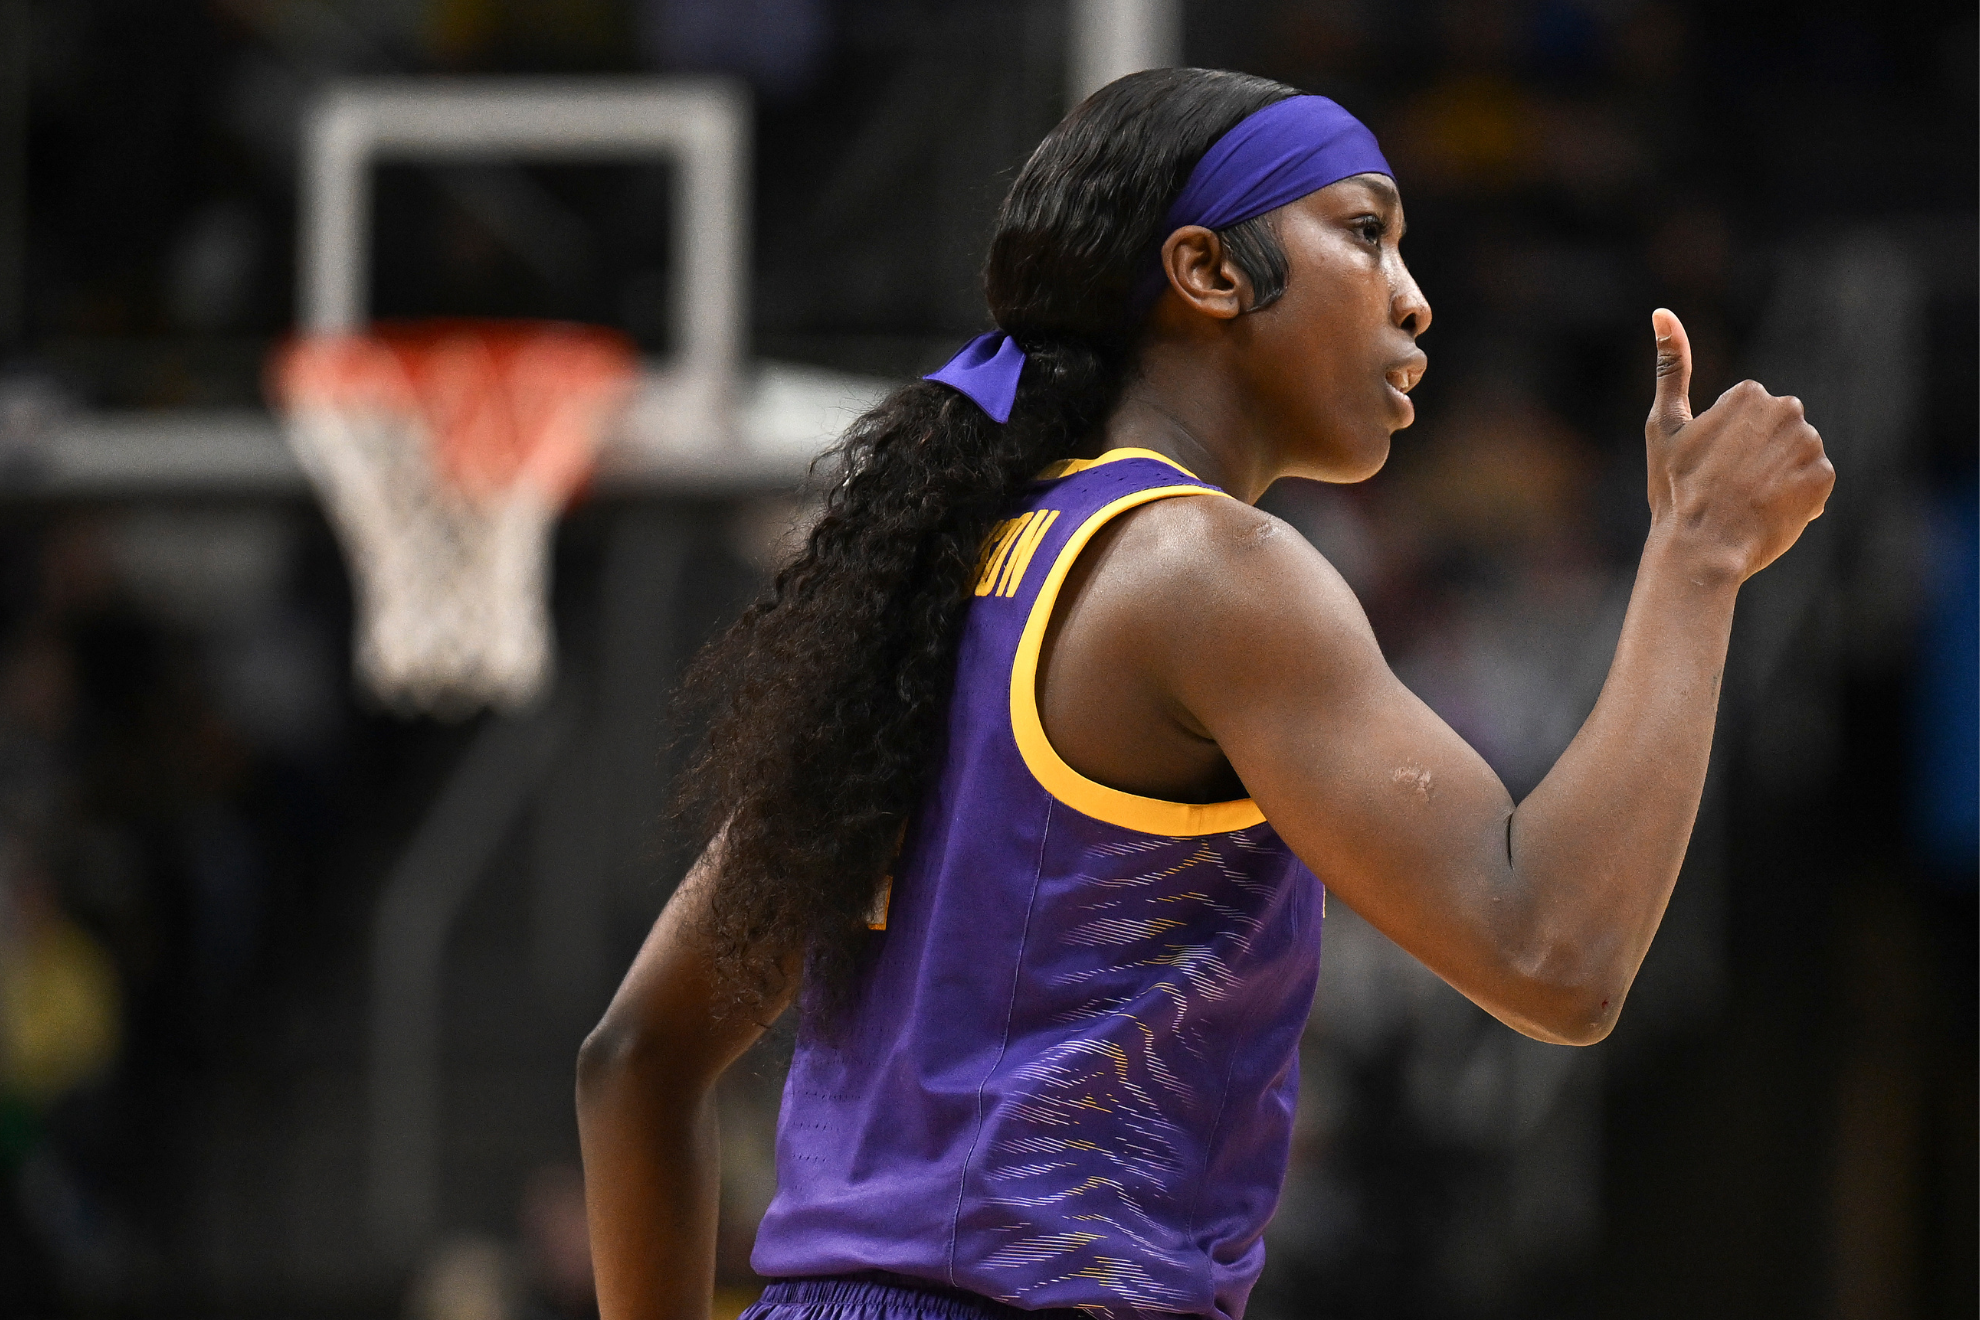 Flaujae Johnson pays emotional tribute to trailblazing WNBA star Candace Parker